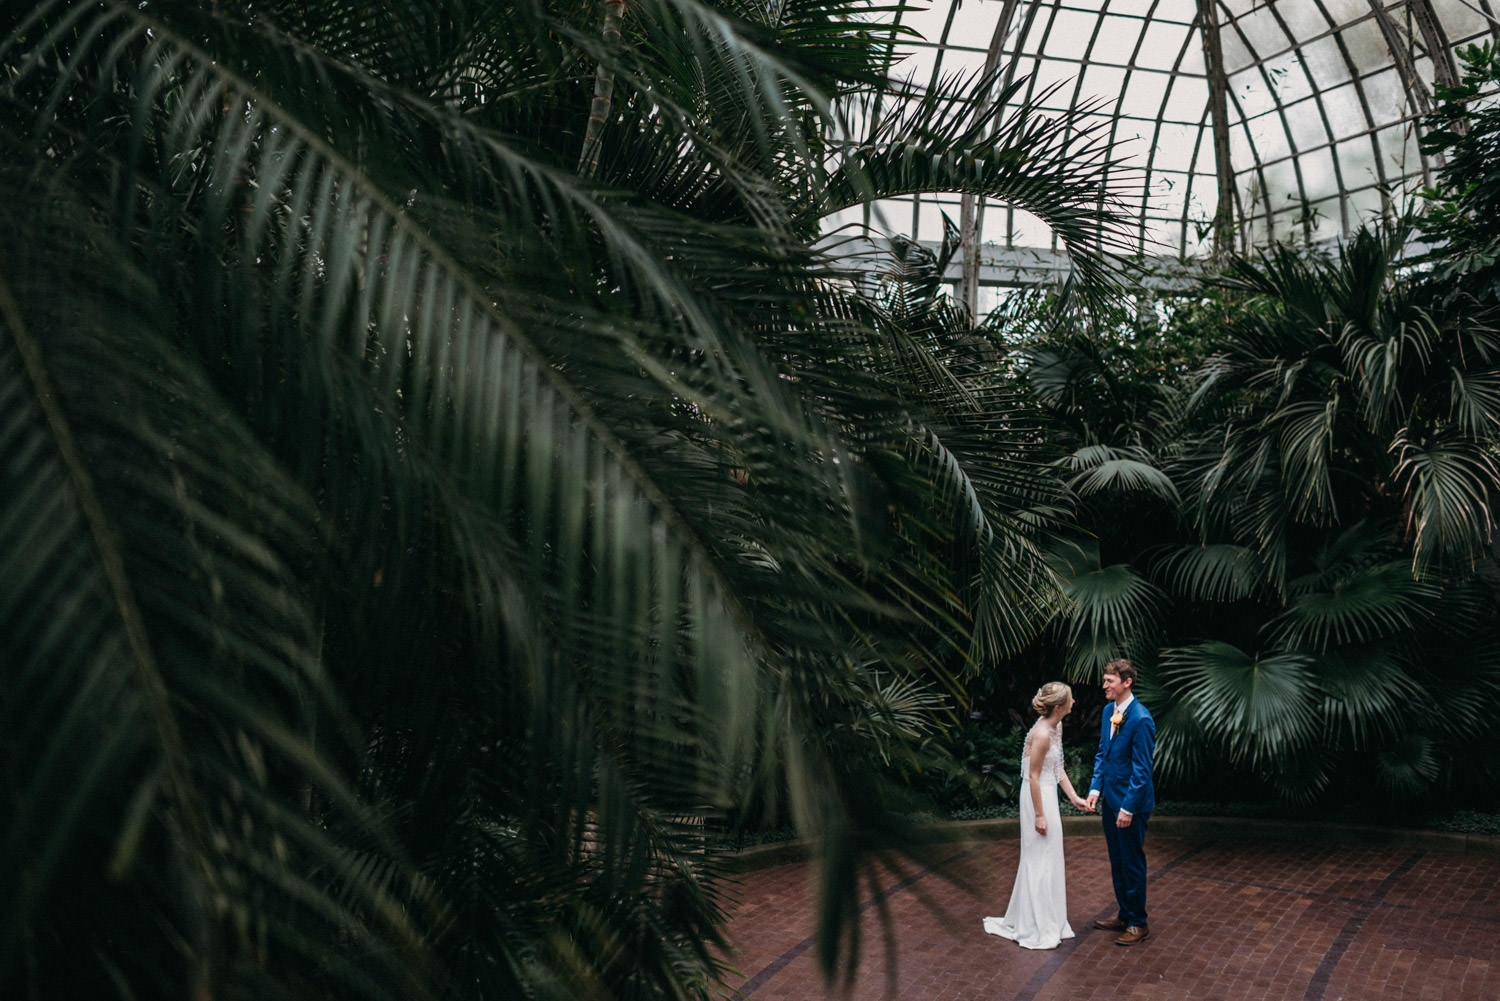 Franklin Park Conservatory Palm House Wedding Photographer